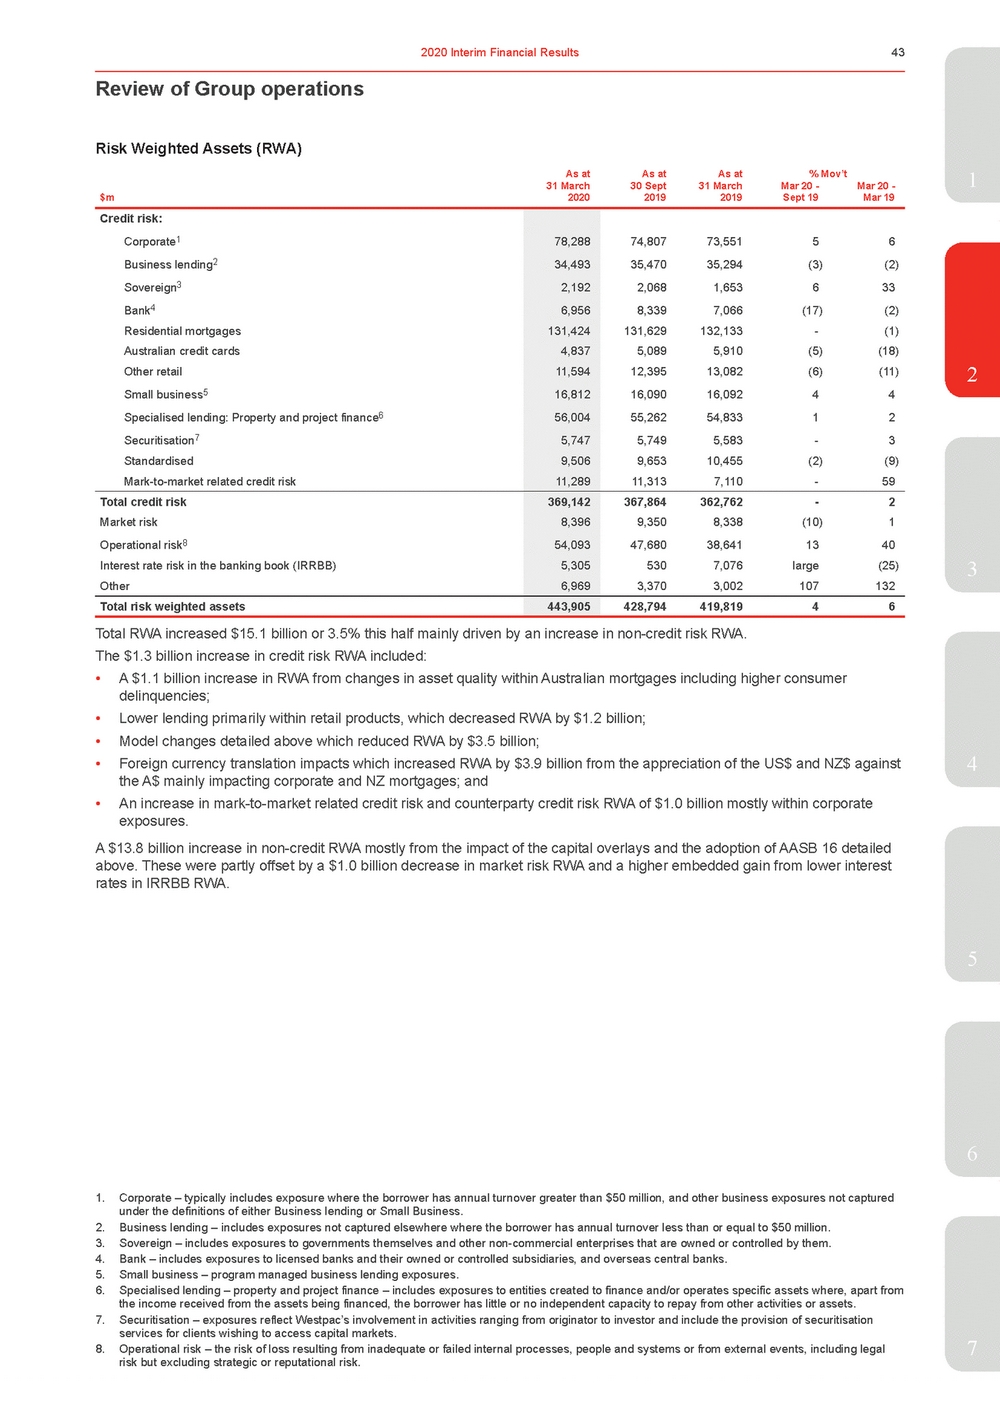 11676-3-ex1_westpac 2020 interim financial results announcement_page_048.jpg